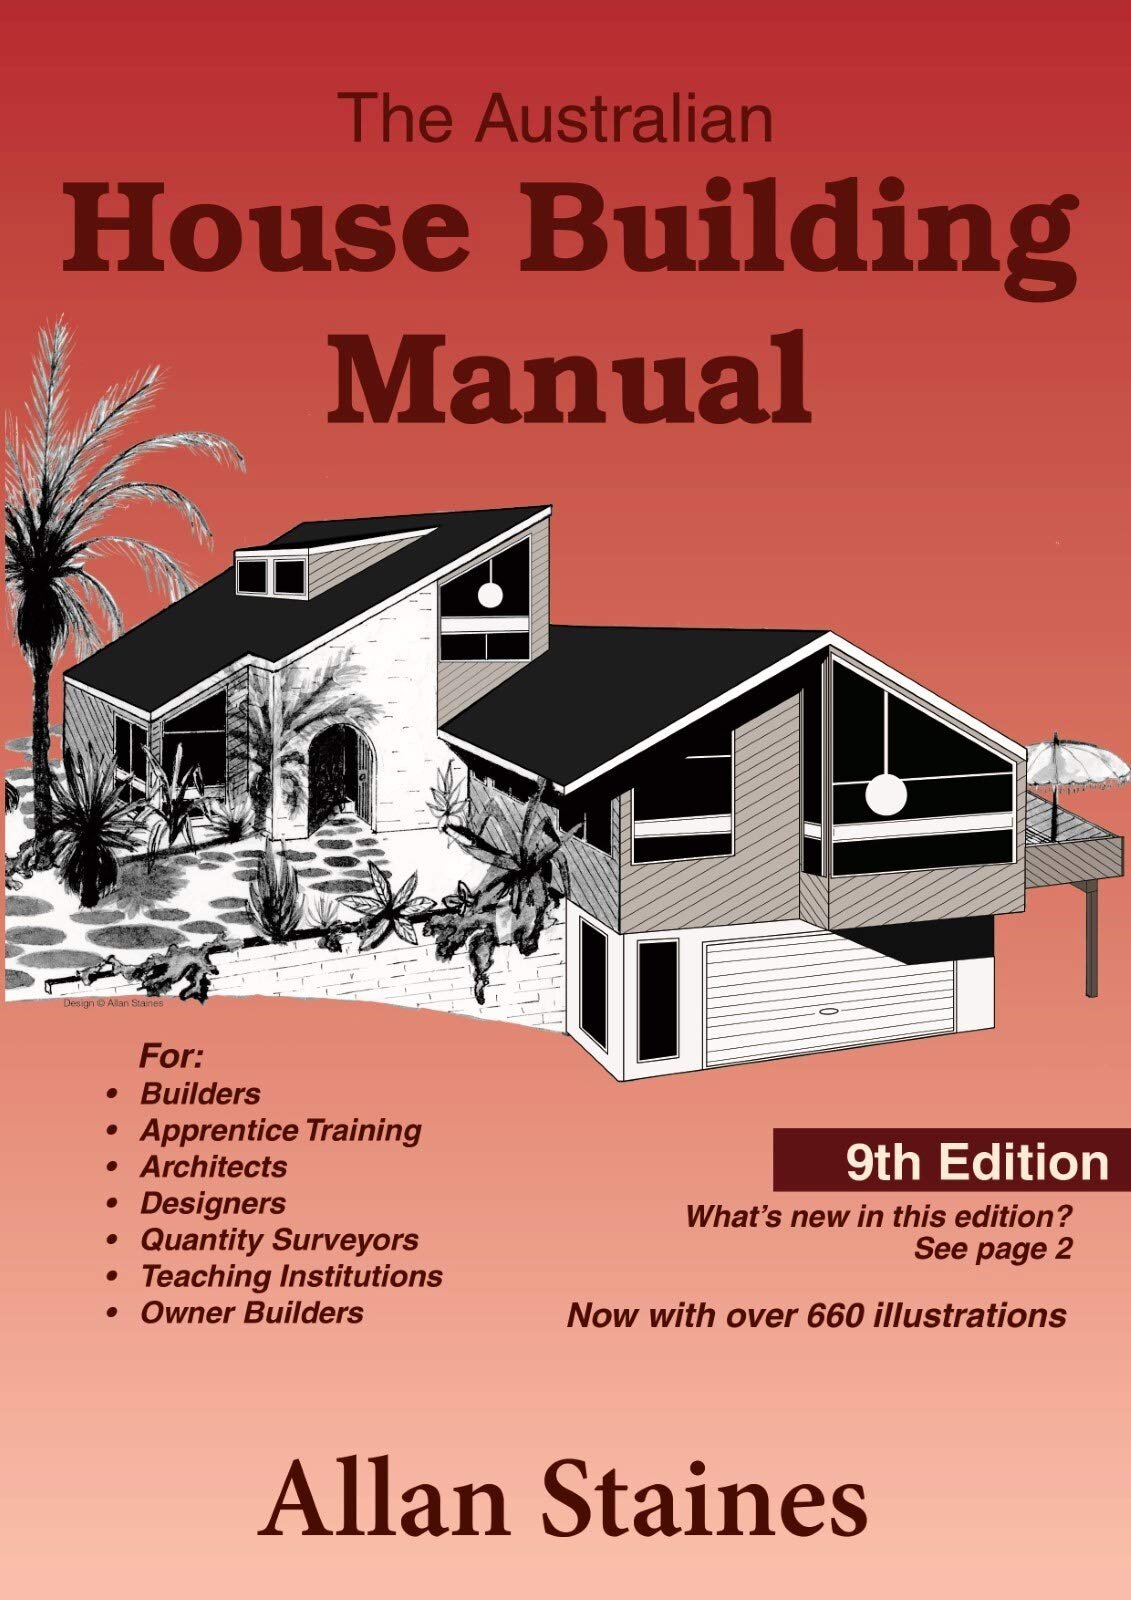 The Australian House Building Manual, $35.00